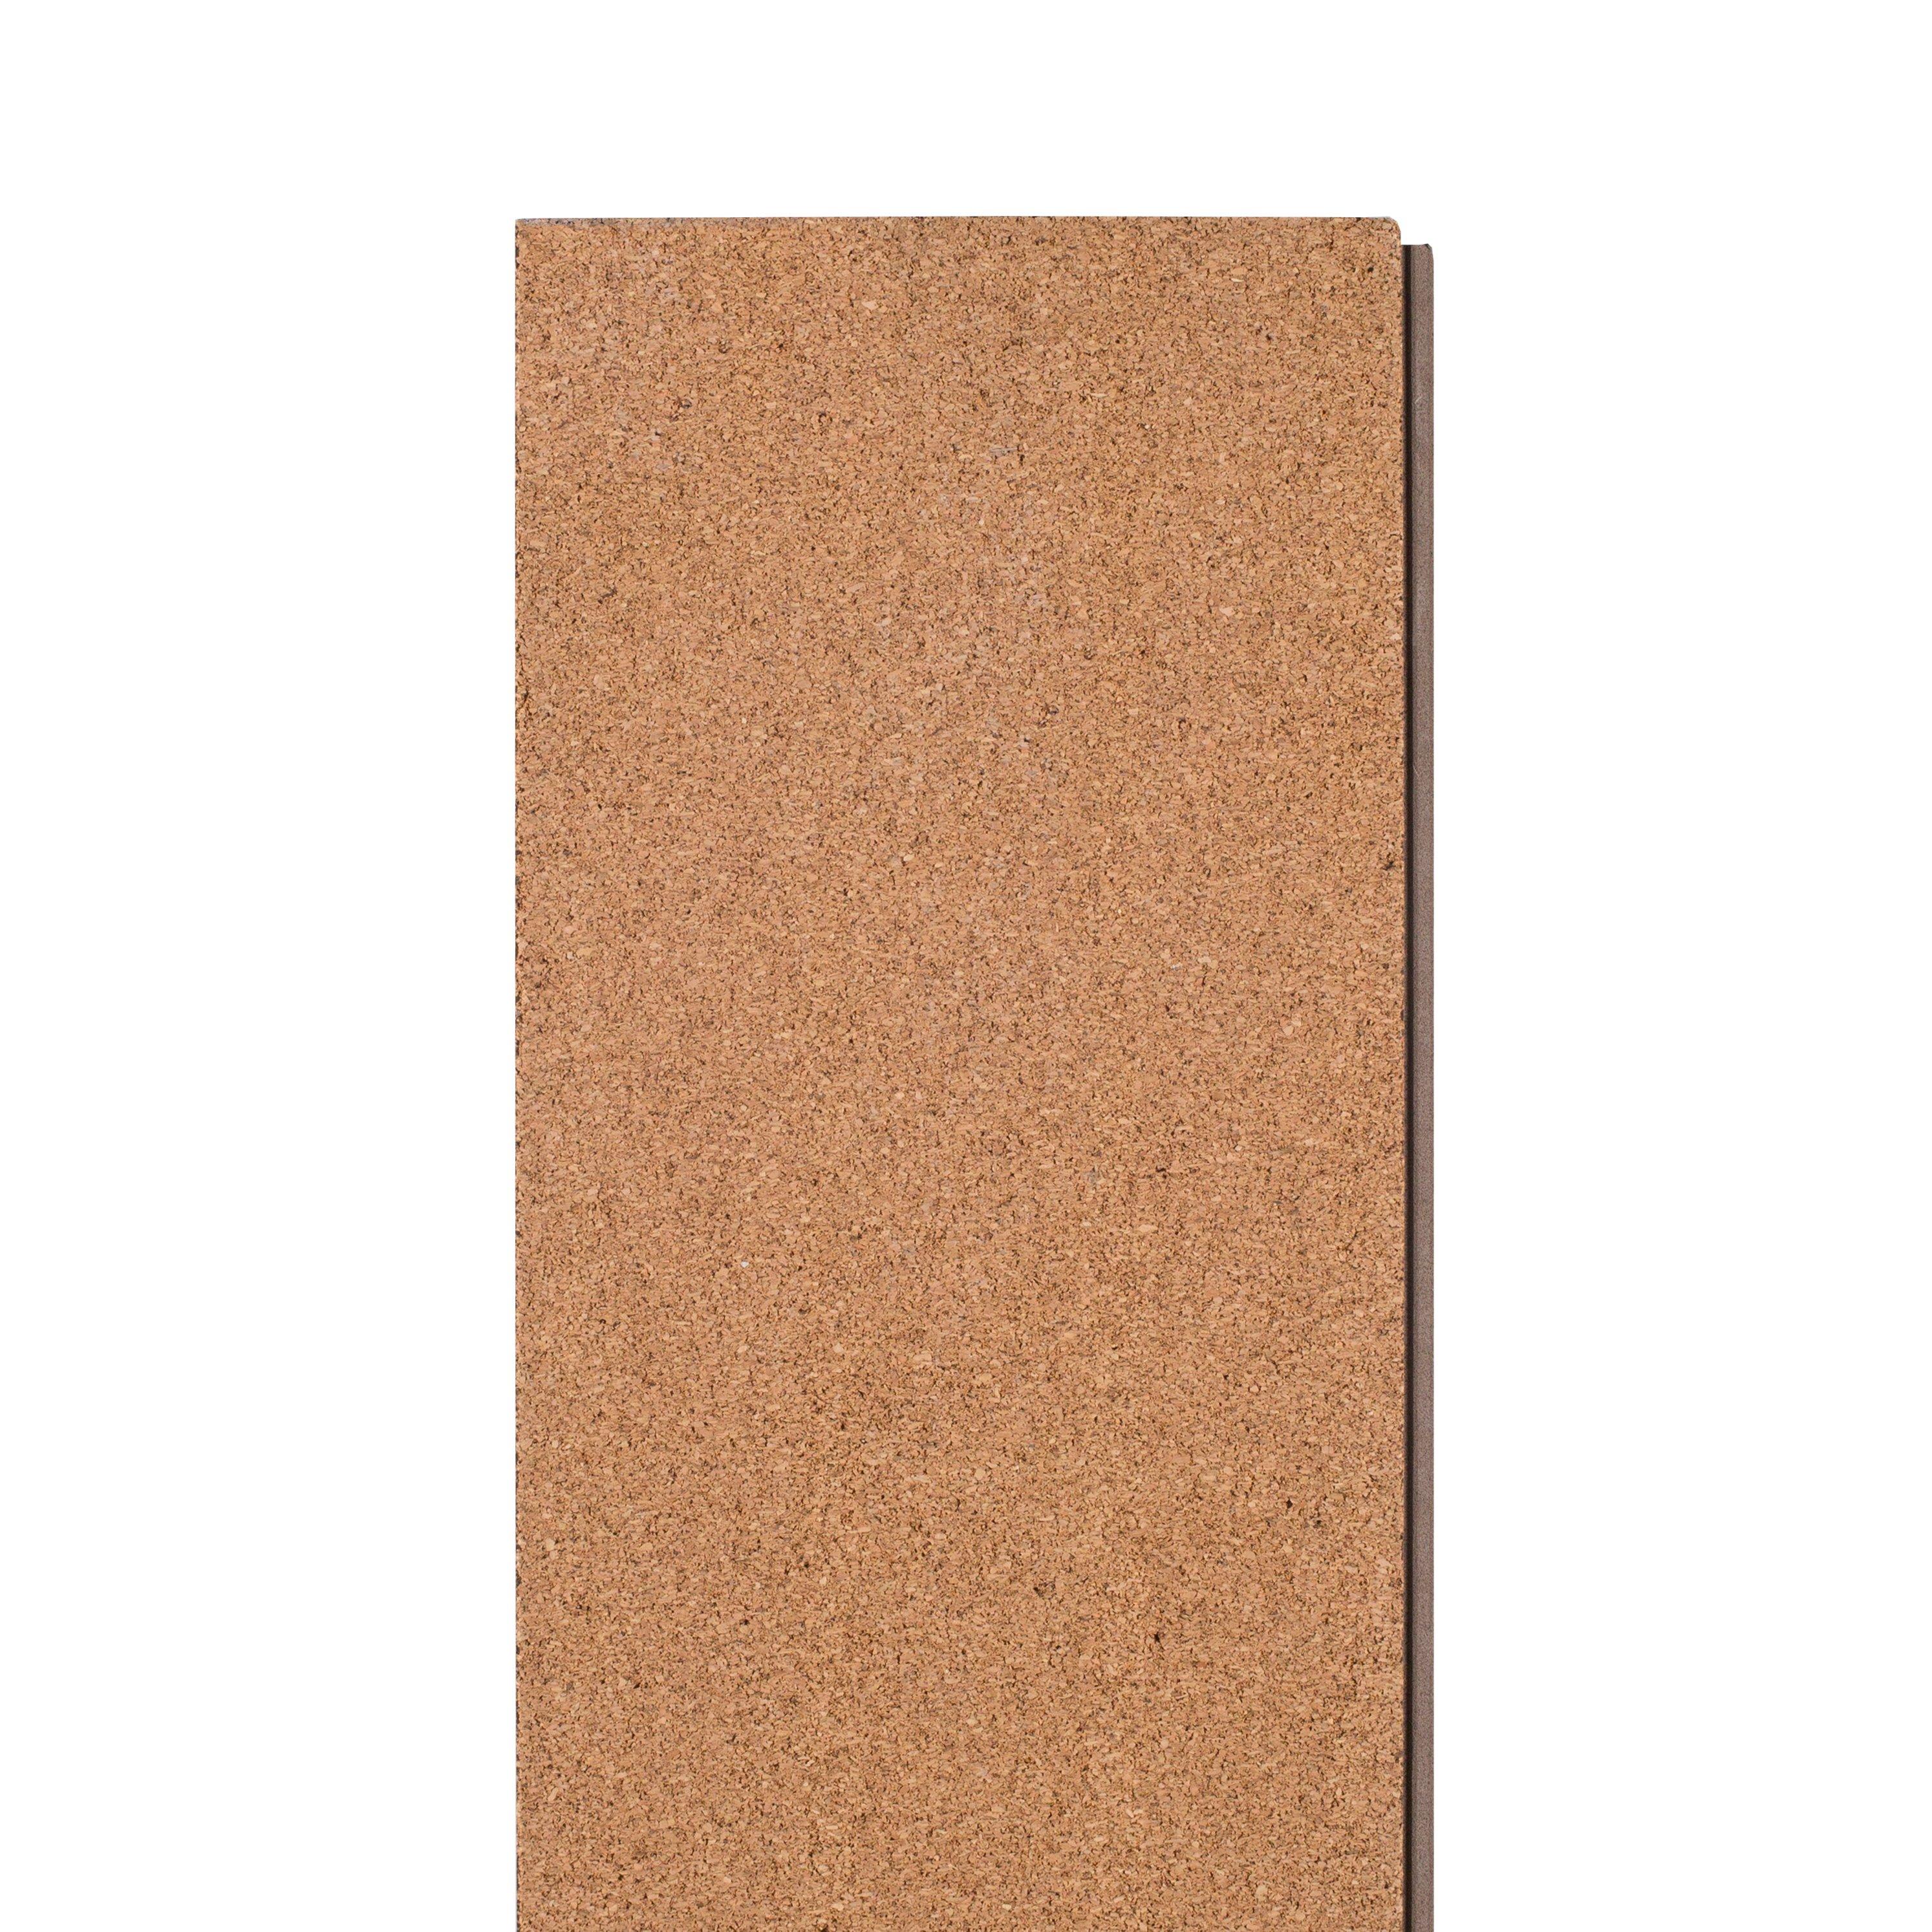 Staccato Stone Luxury Vinyl Tile - Cork Back